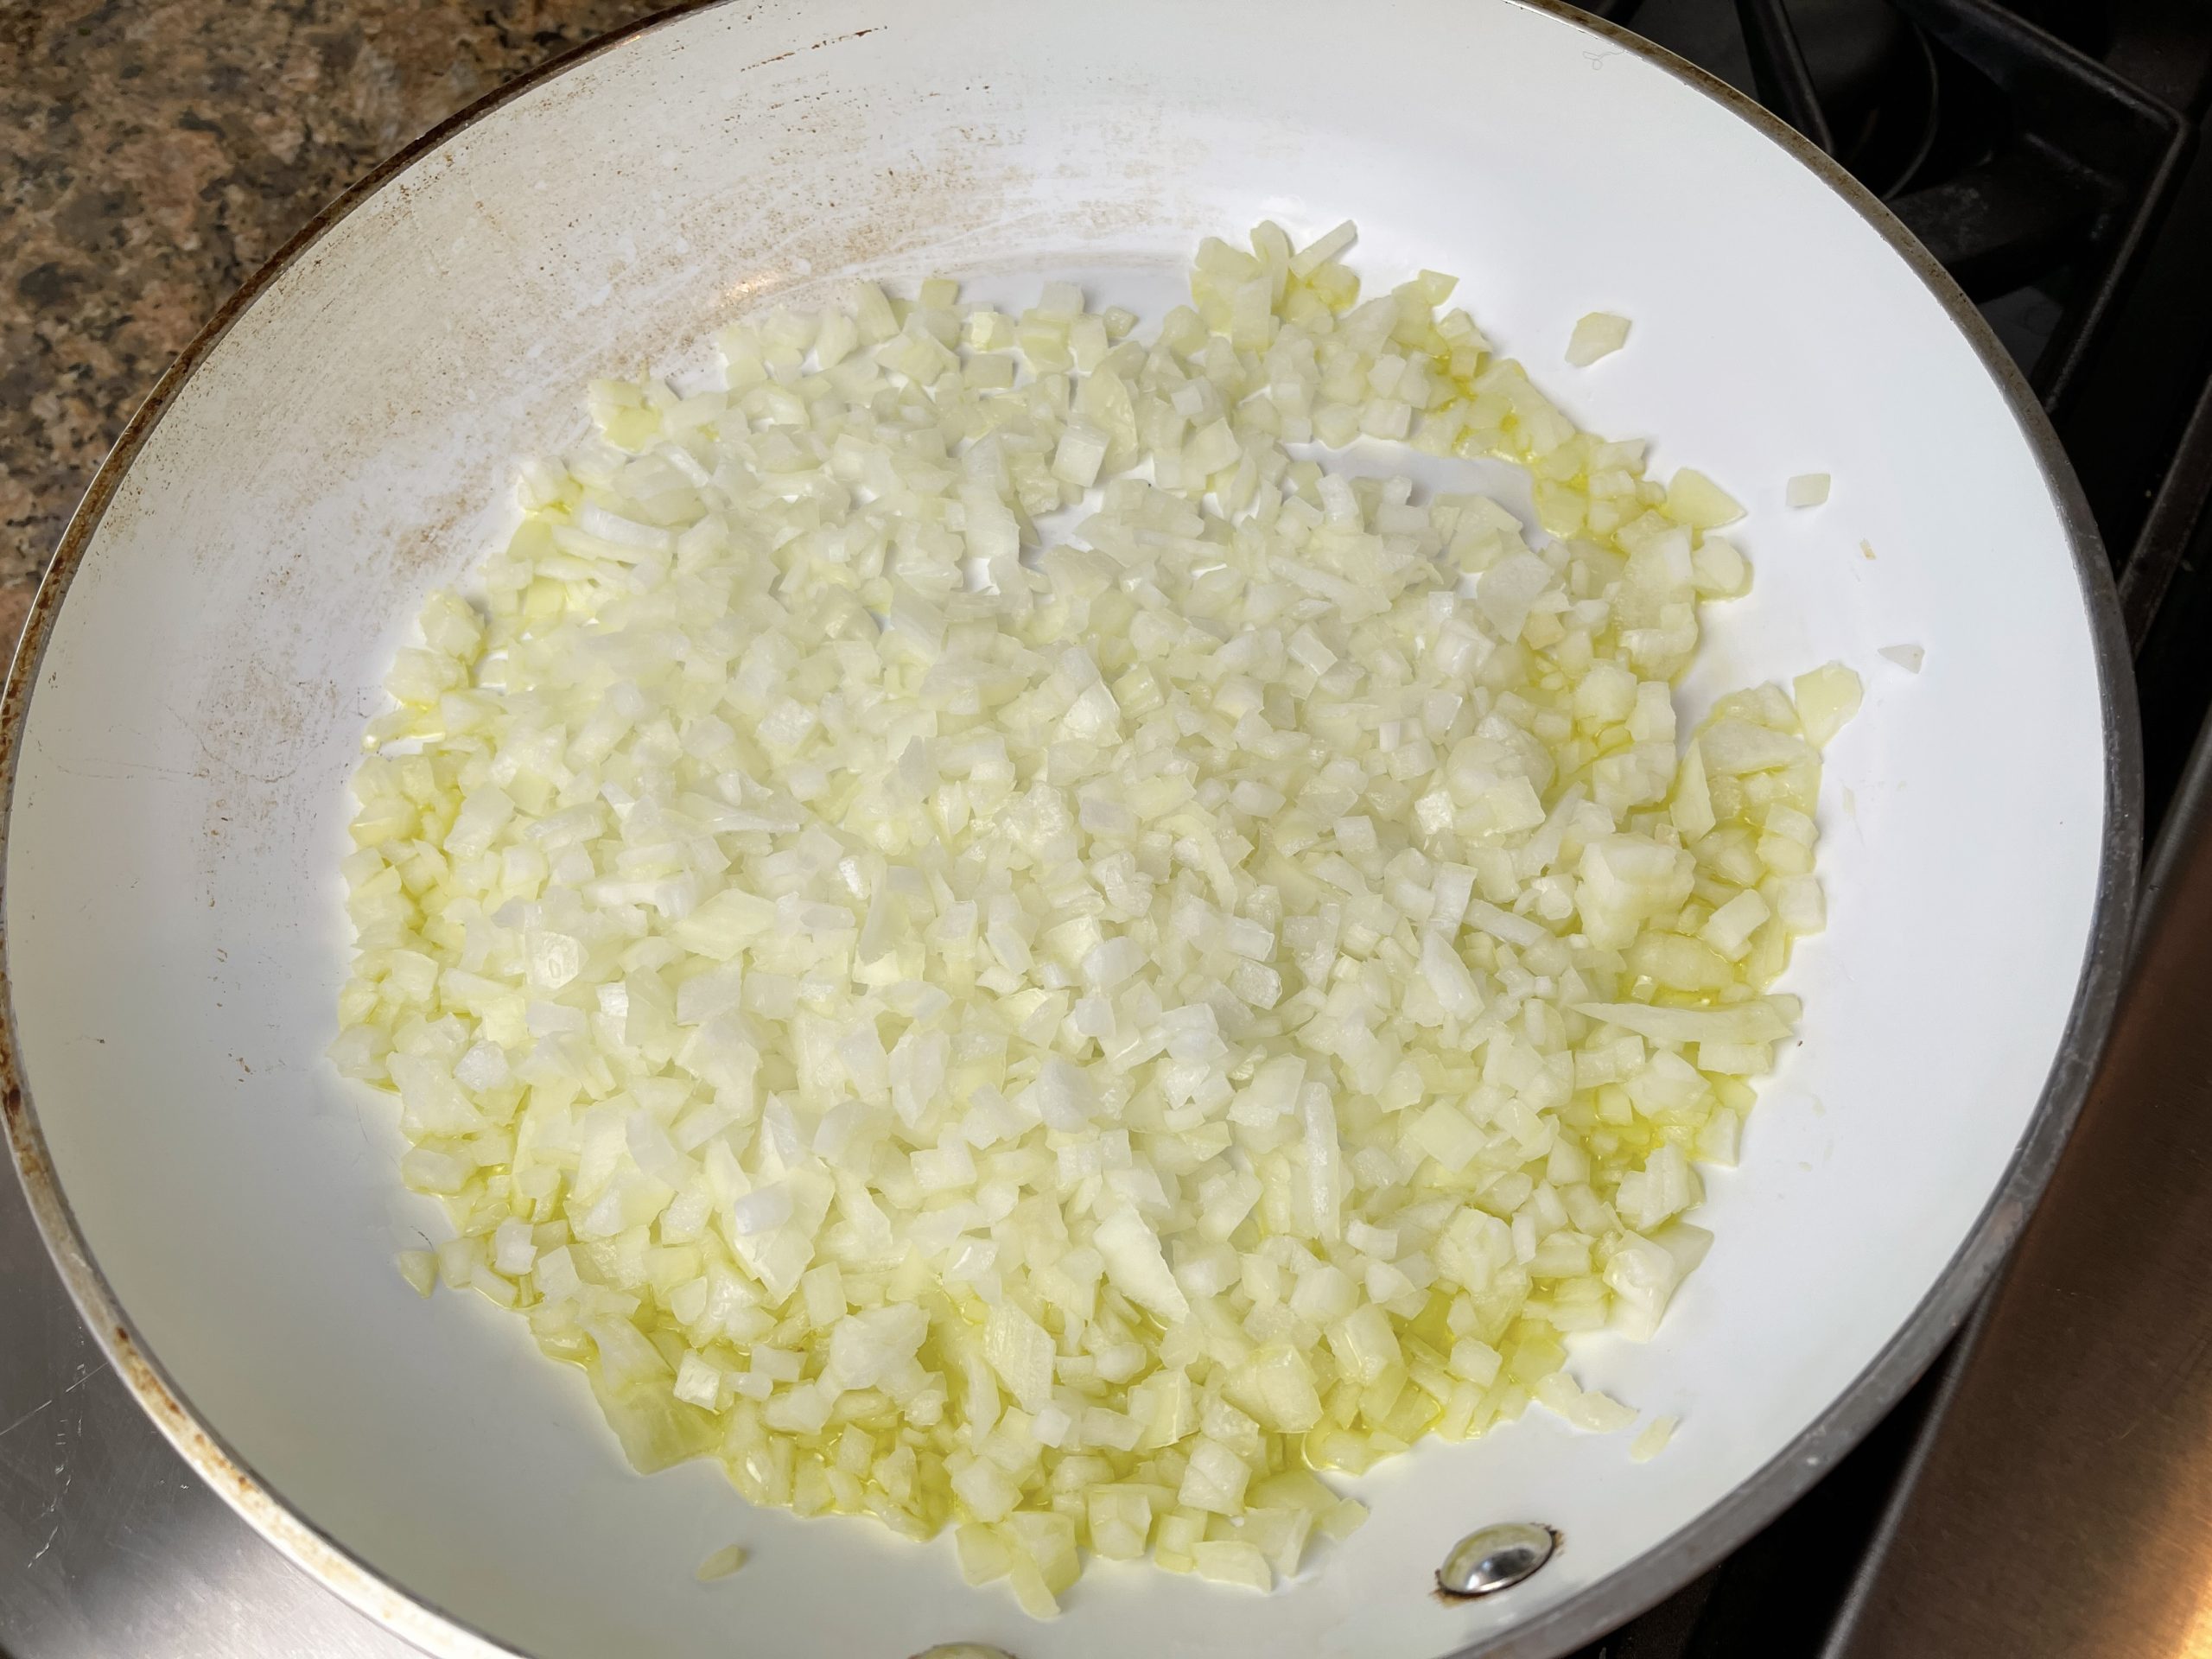 sauté the onions slowly over medium-low heat 